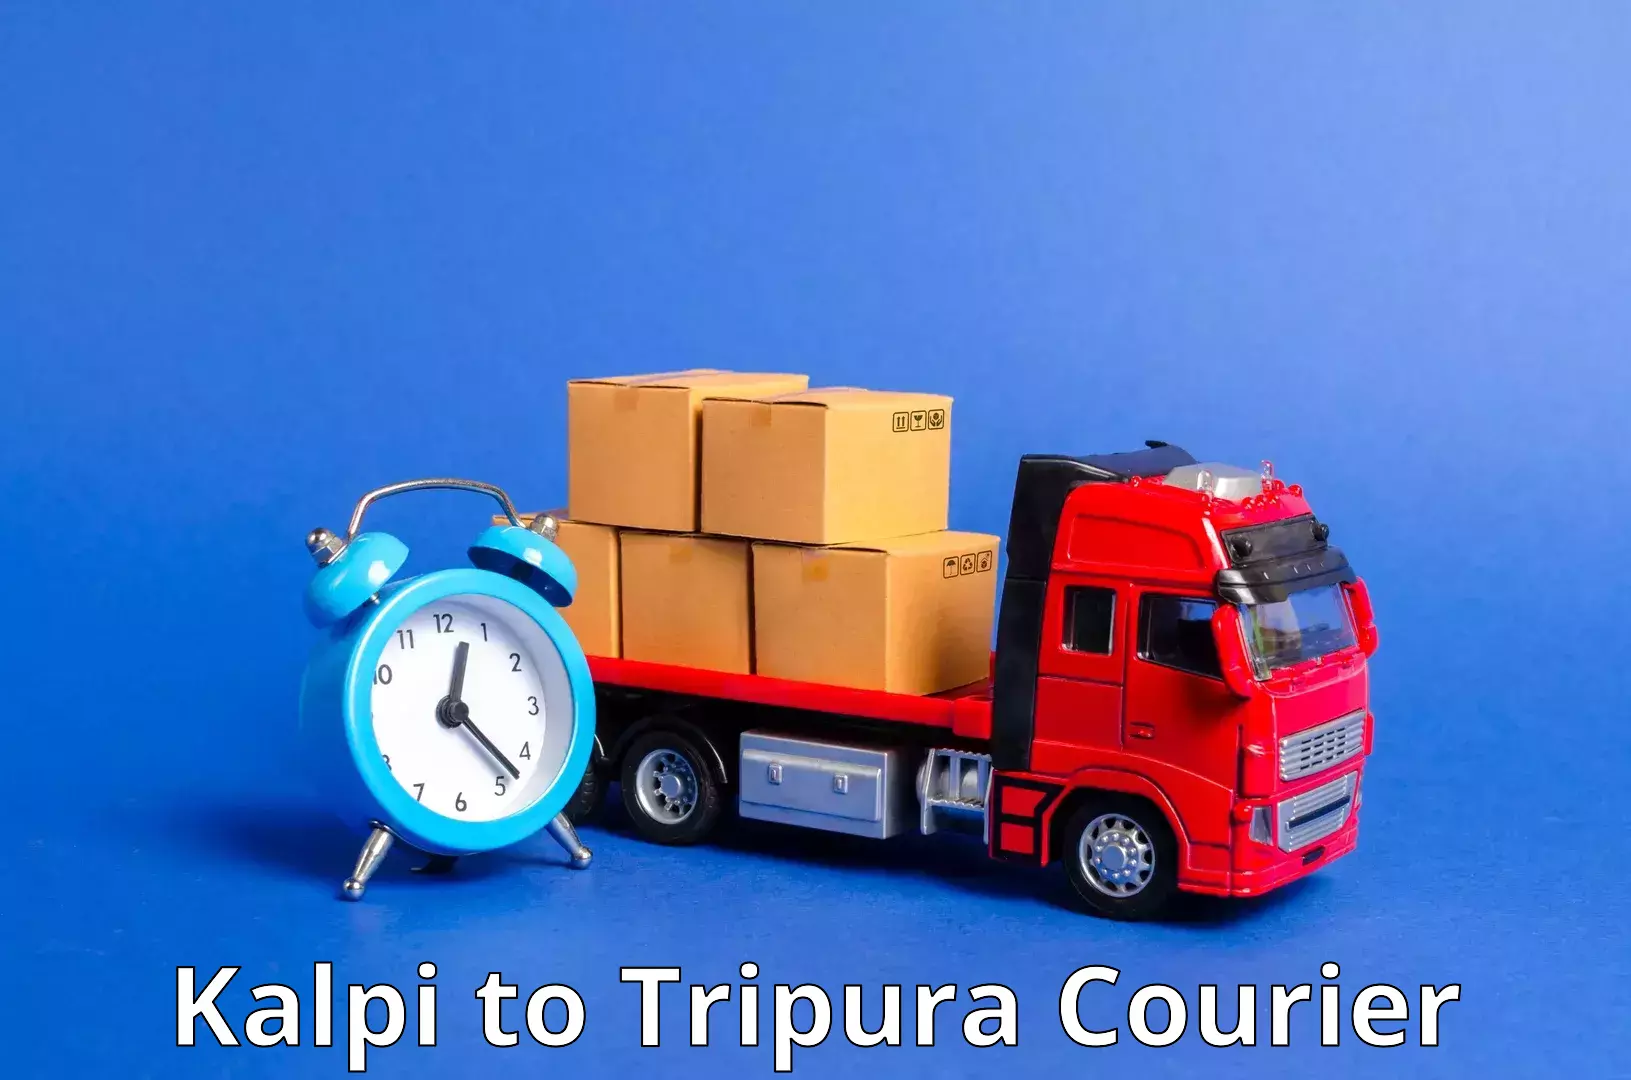 Reliable courier service Kalpi to Udaipur Tripura